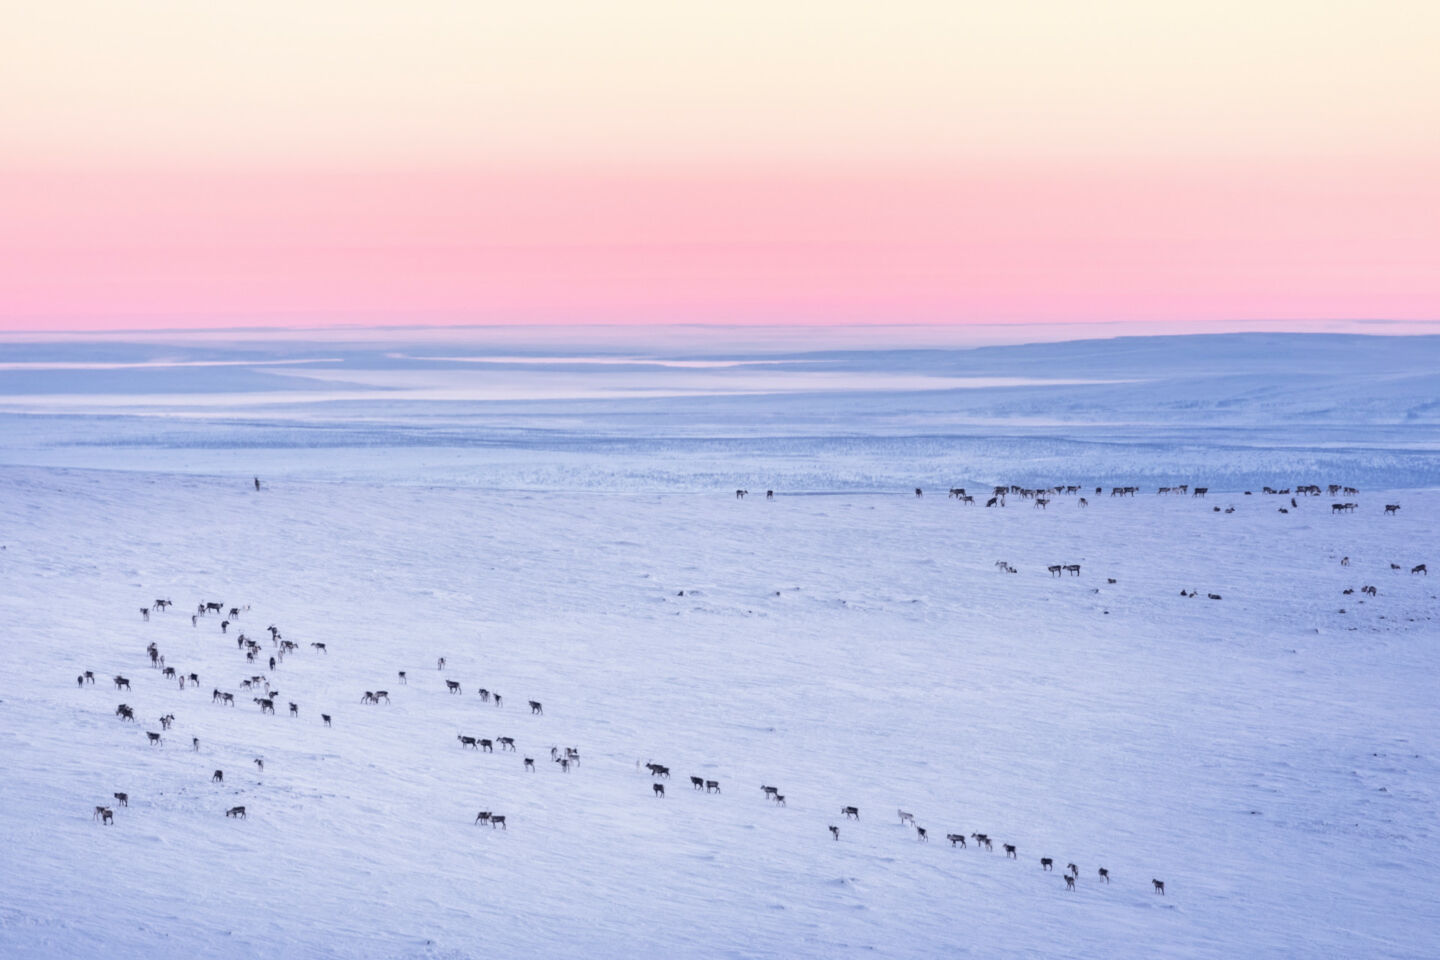 Polar night over a snowy plain, a wilderness film location in Finnish Lapland